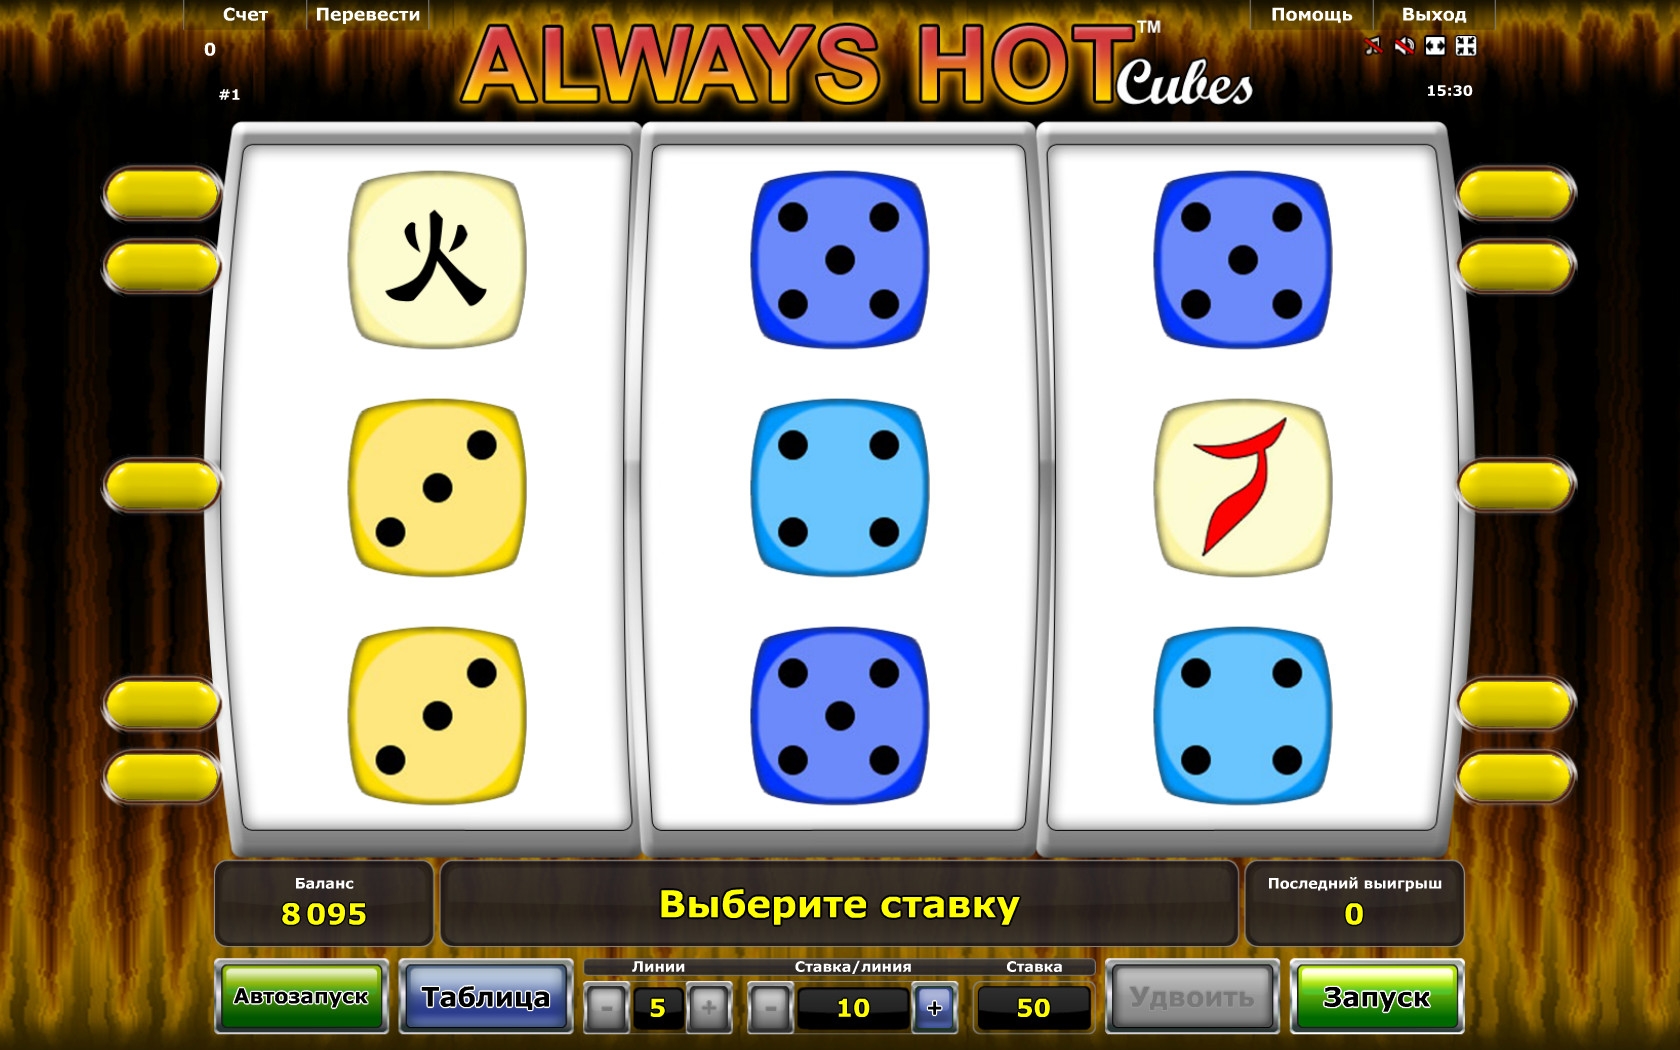 slot machines online always hot cubes